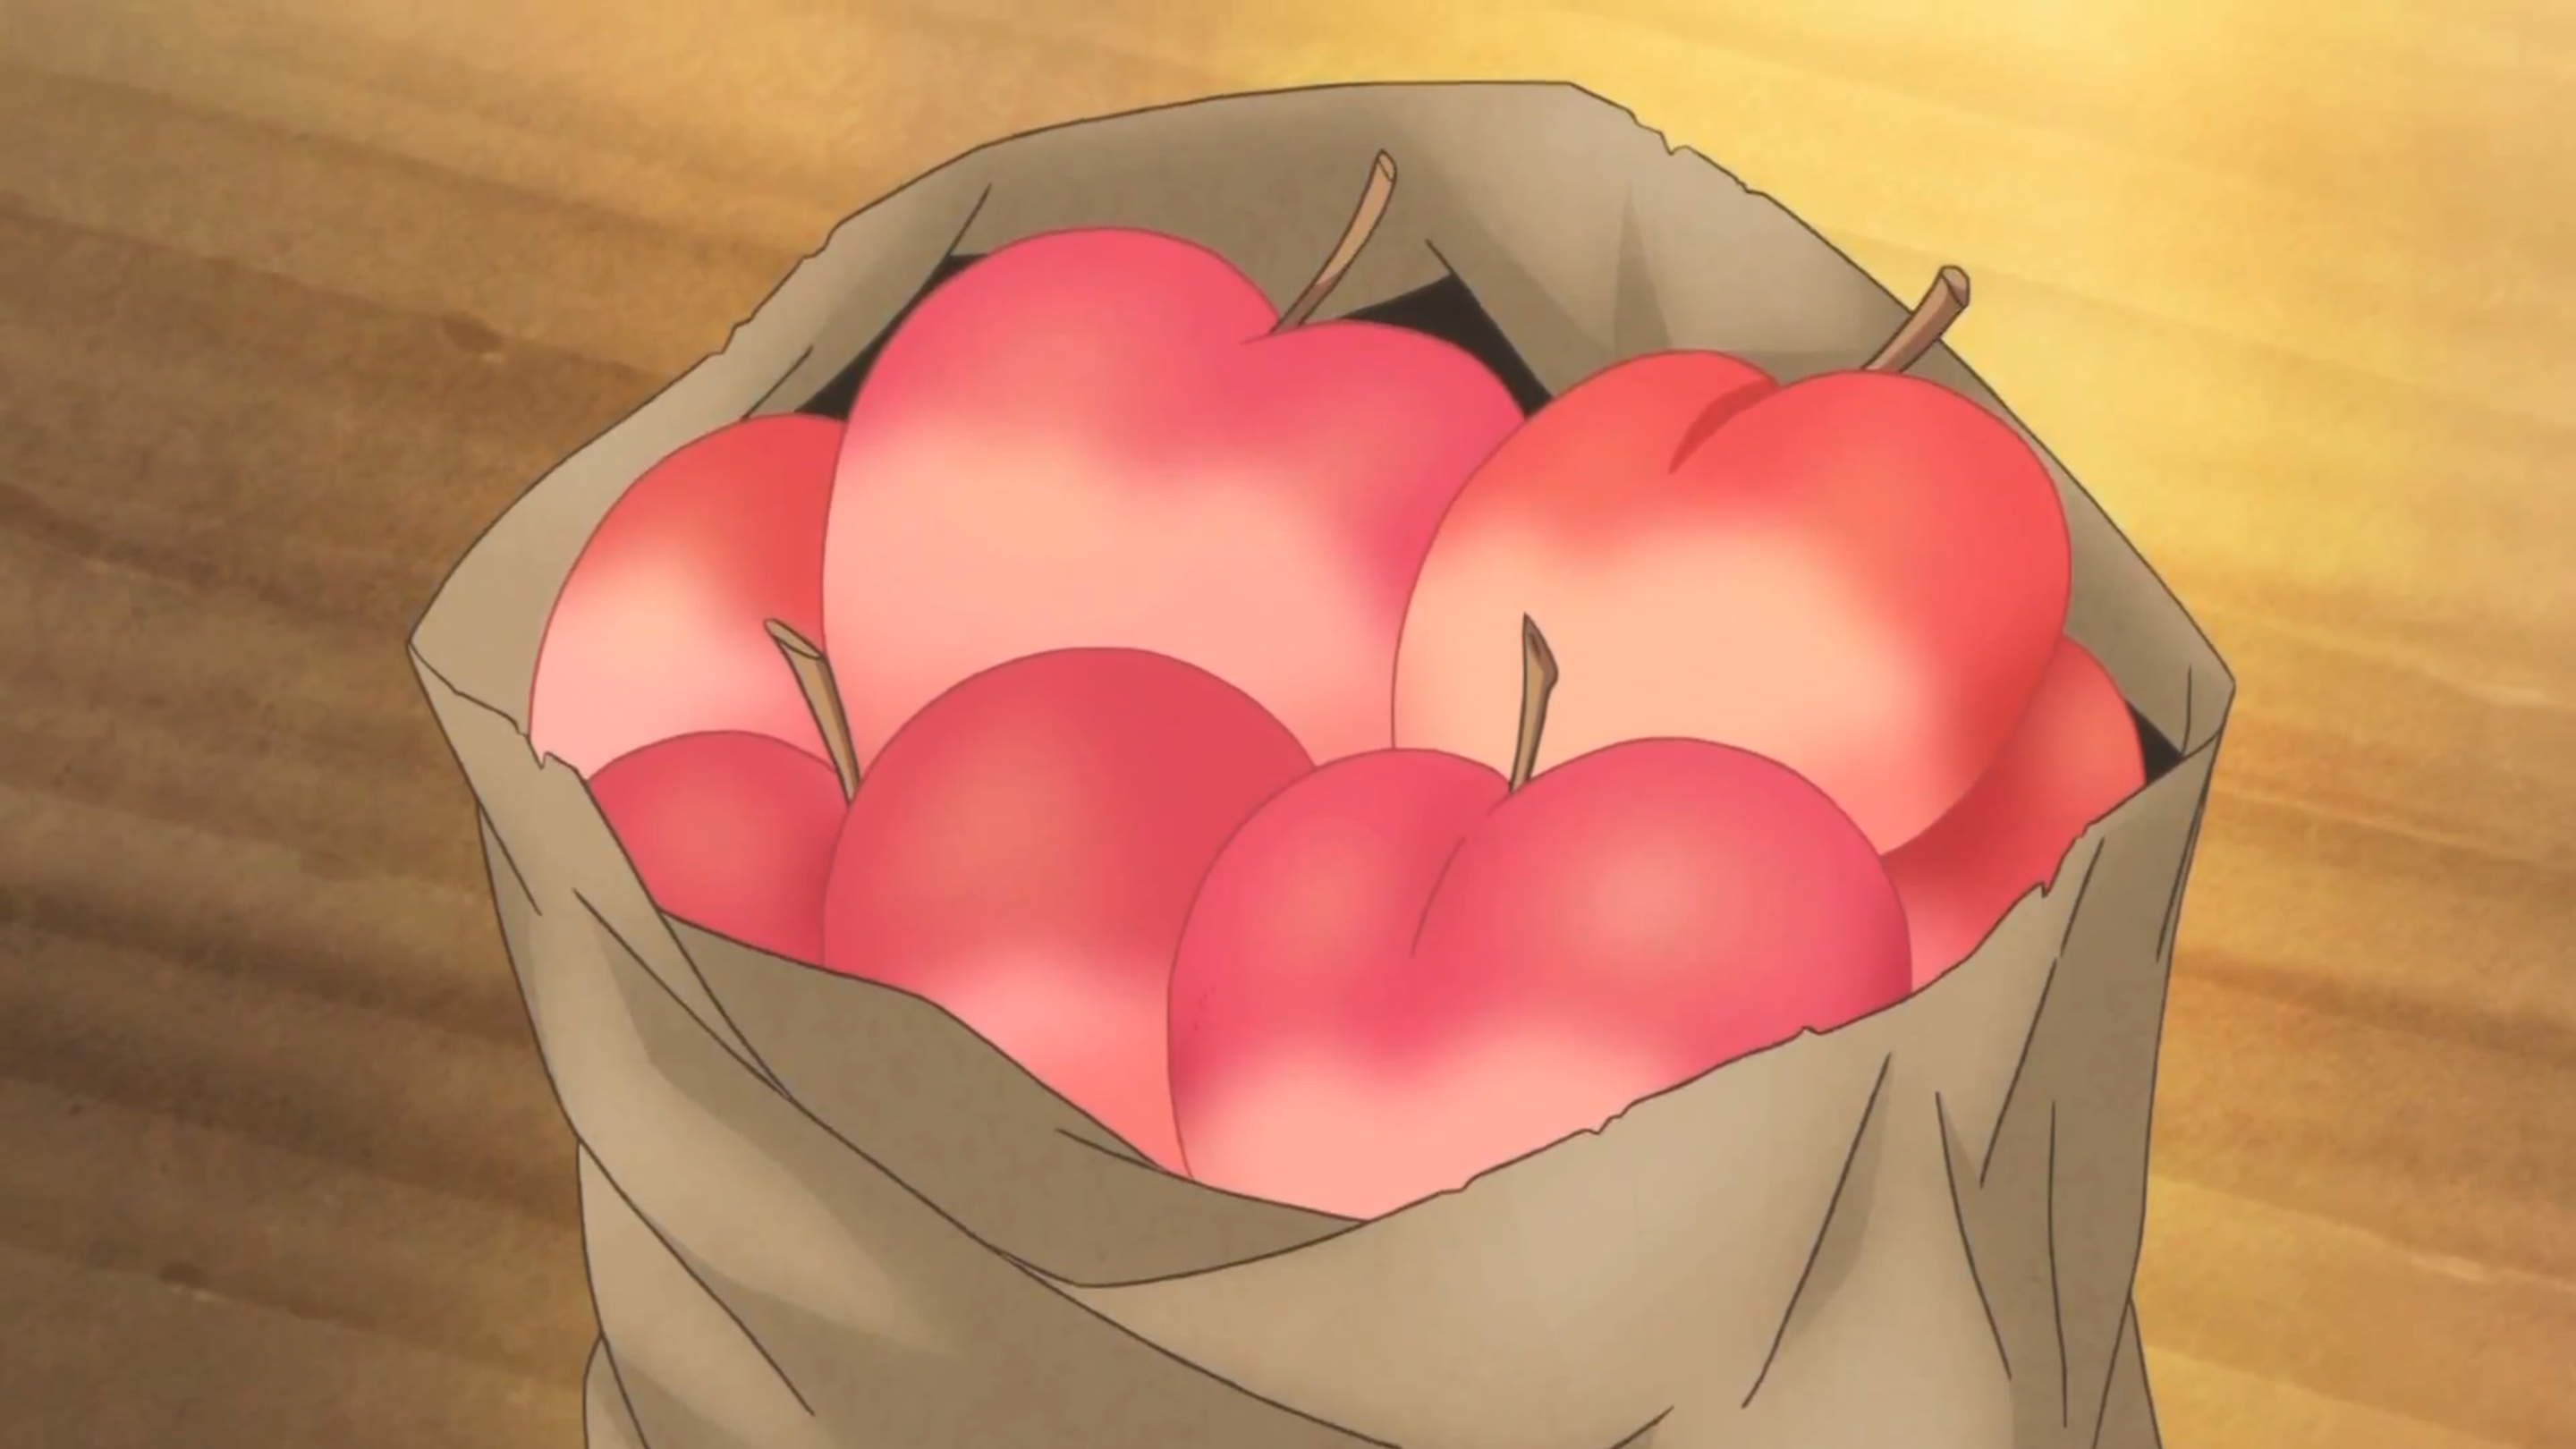 All Blox Fruits Devil Fruits VS Anime! - YouTube